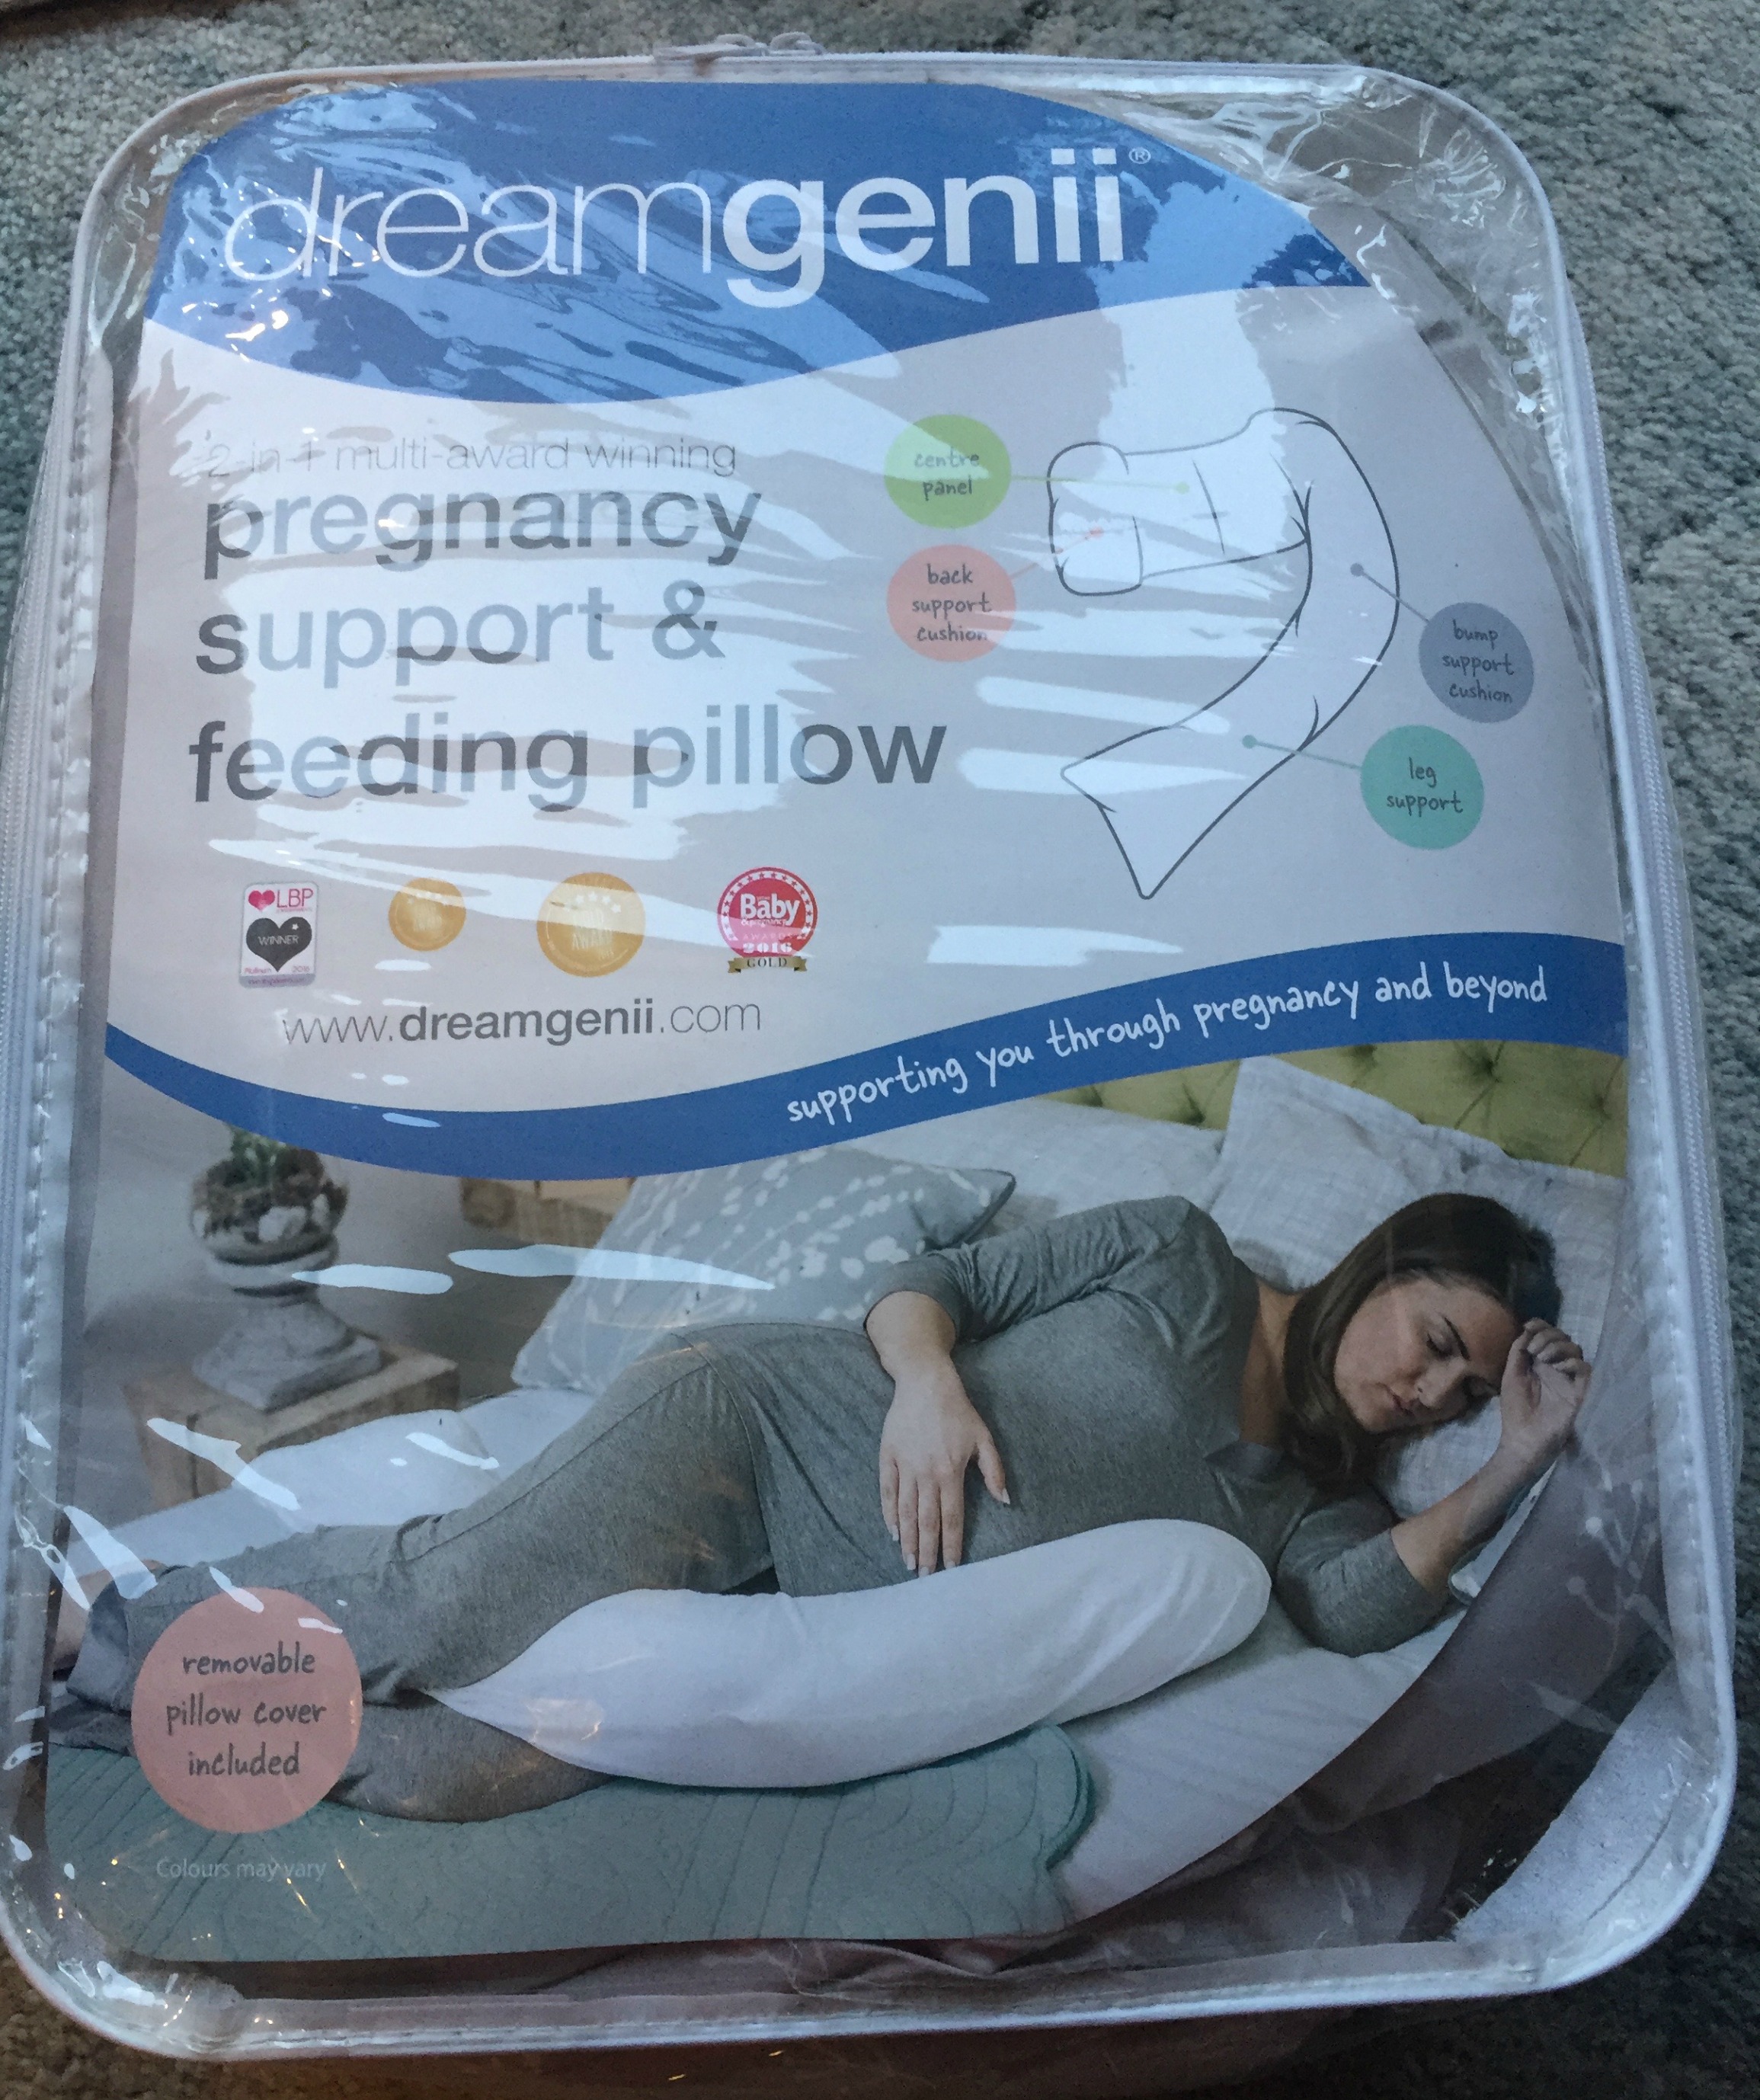 Quality Pregnancy Sleep Thanks To Dreamgenii Penny Blogs